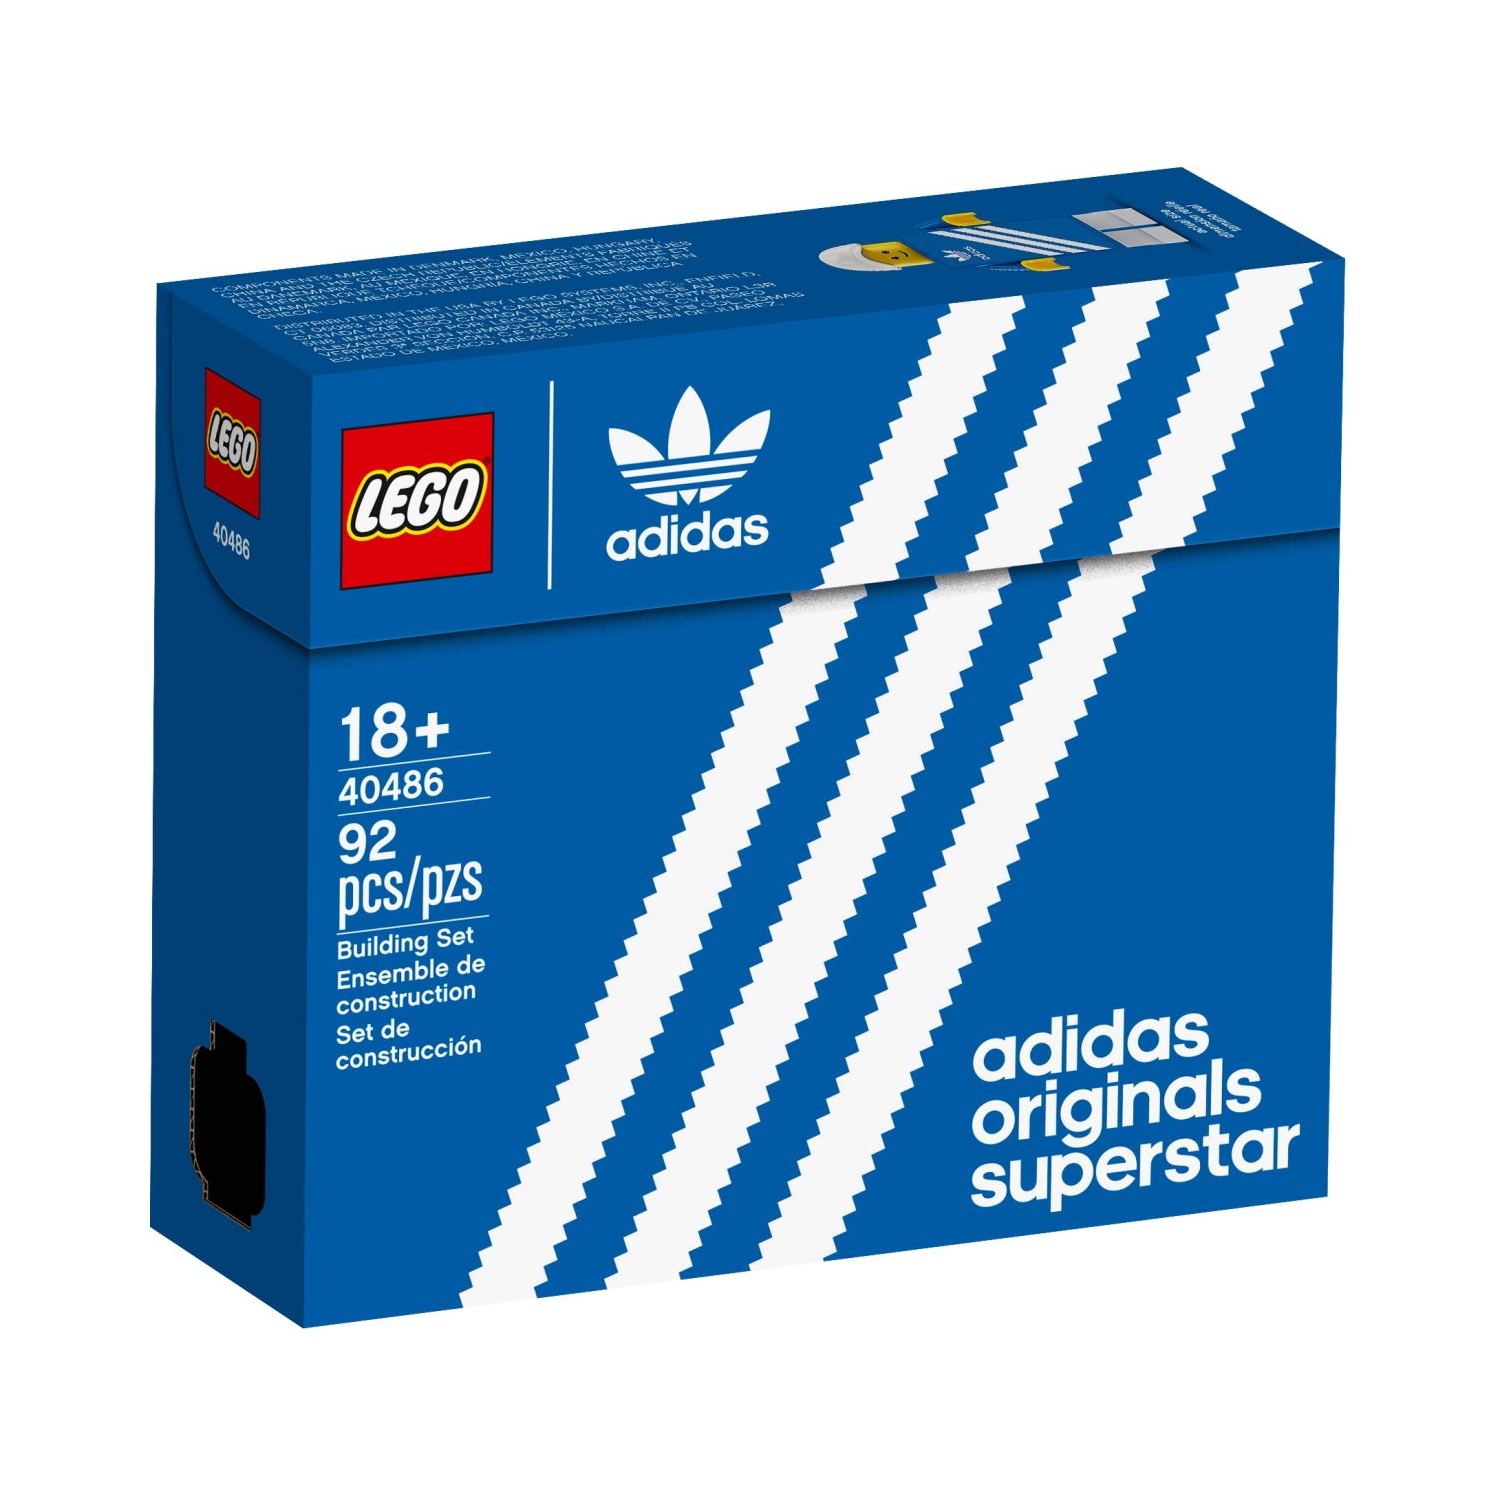 LEGO adidas Originals Superstar - 92 Piece Building Kit [LEGO, #40486, Ages 18+]